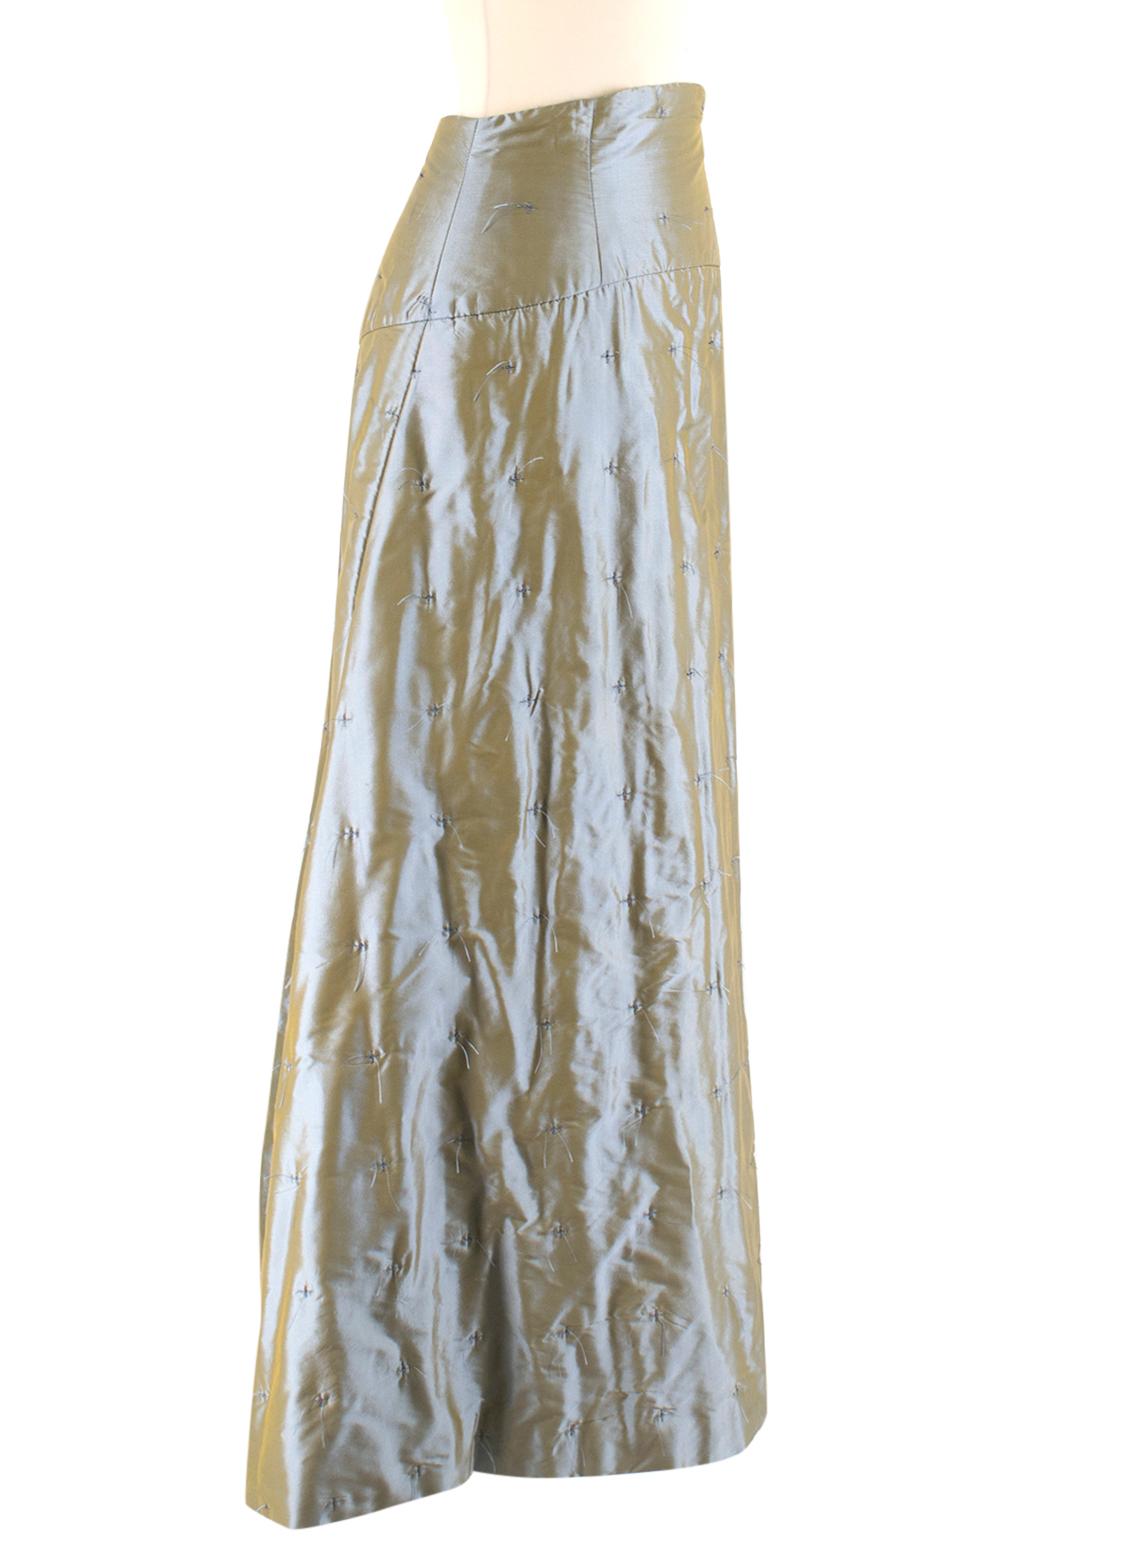 Chanel High Waist Iridescent Feathered Long Skirt 

Silk, grey iridescent quilt skirt, 
Long evening skirt,
High-waisted,
Interior waist cincher and metal zip closure, 
Features side zip, 
Metal Chanel logo on front,
Lined in silk, 
Features a